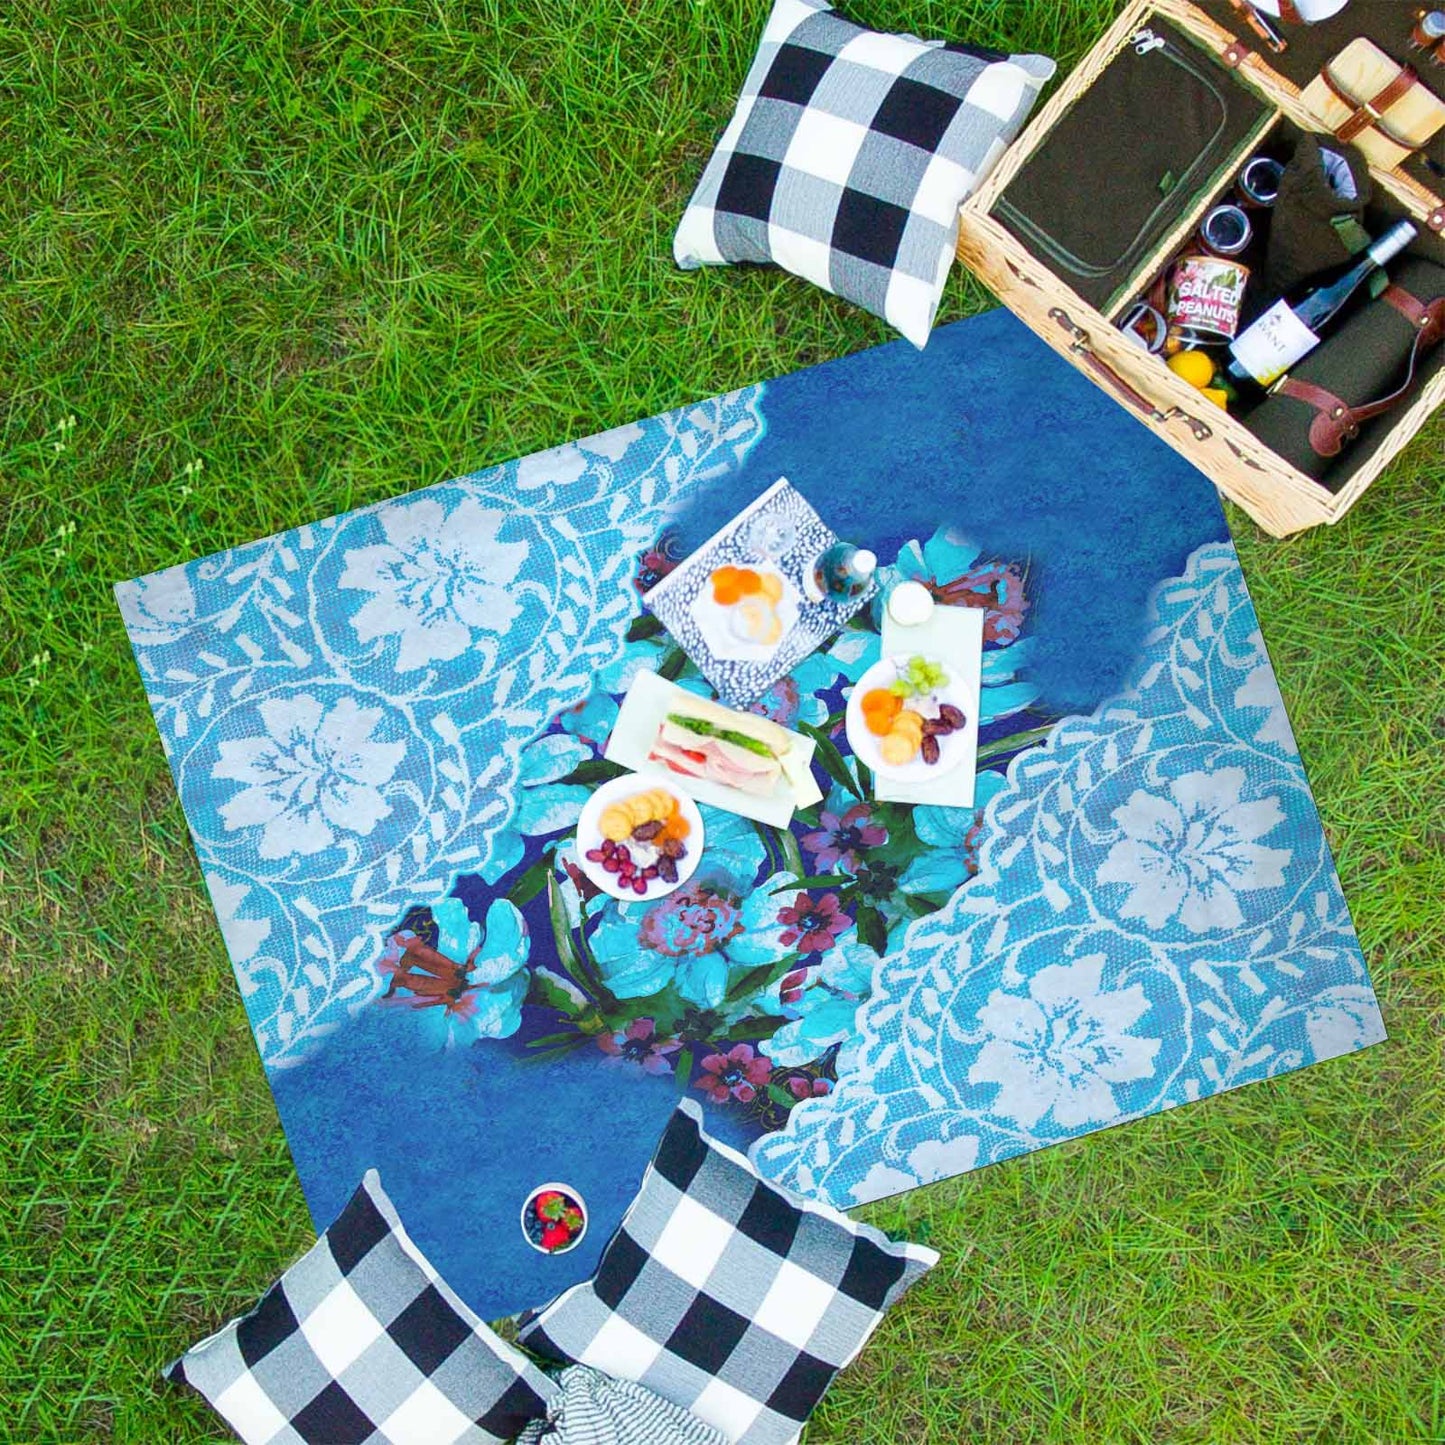 Victorian lace print waterproof picnic mat, 69 x 55in, design 49